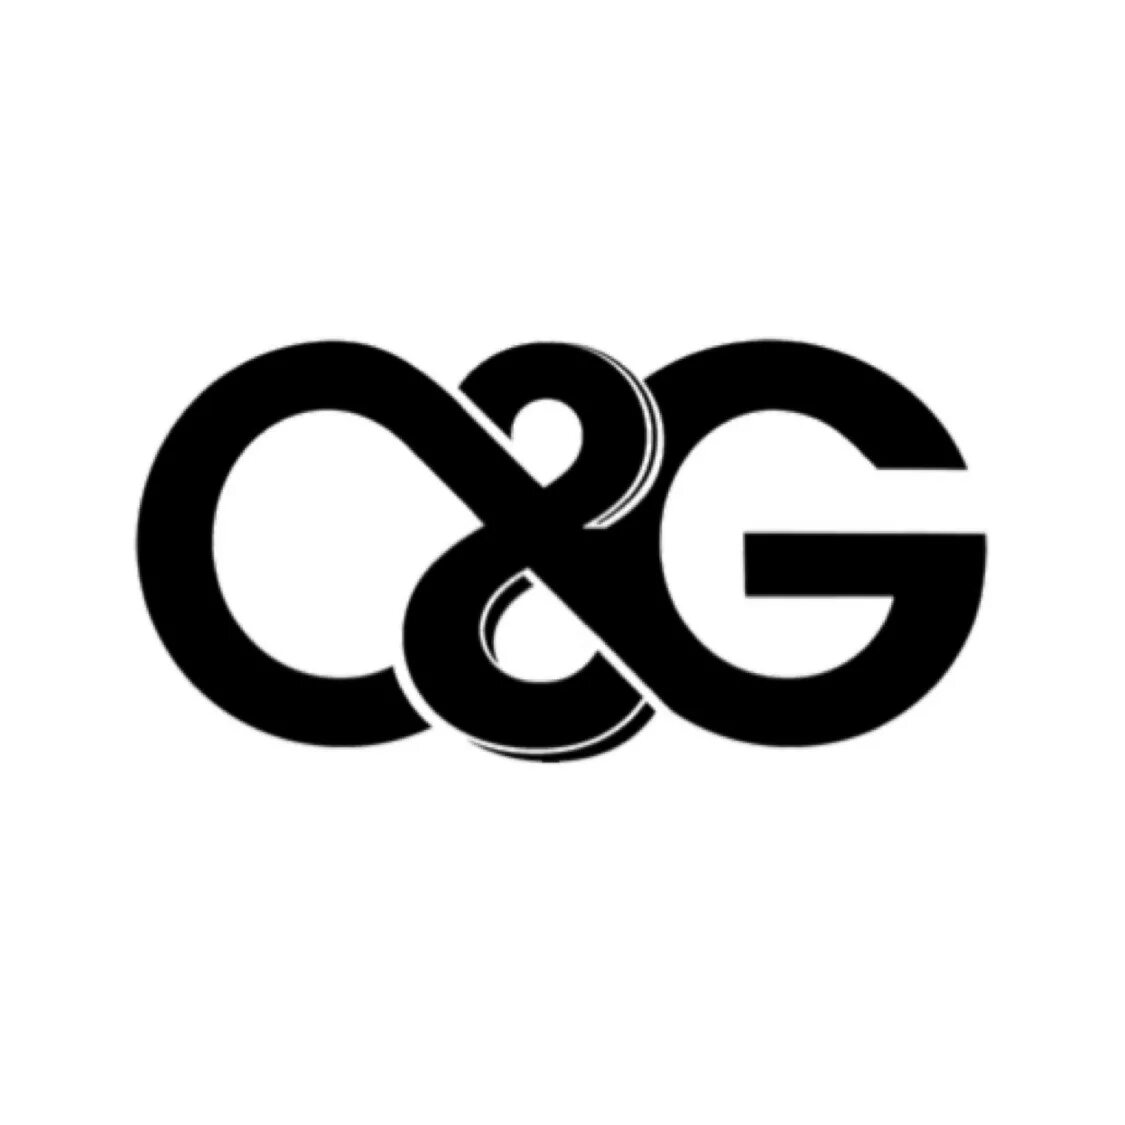 C ое. Логотип g. Логотип c c. CG логотип бренда. Логотип с буквами CG.